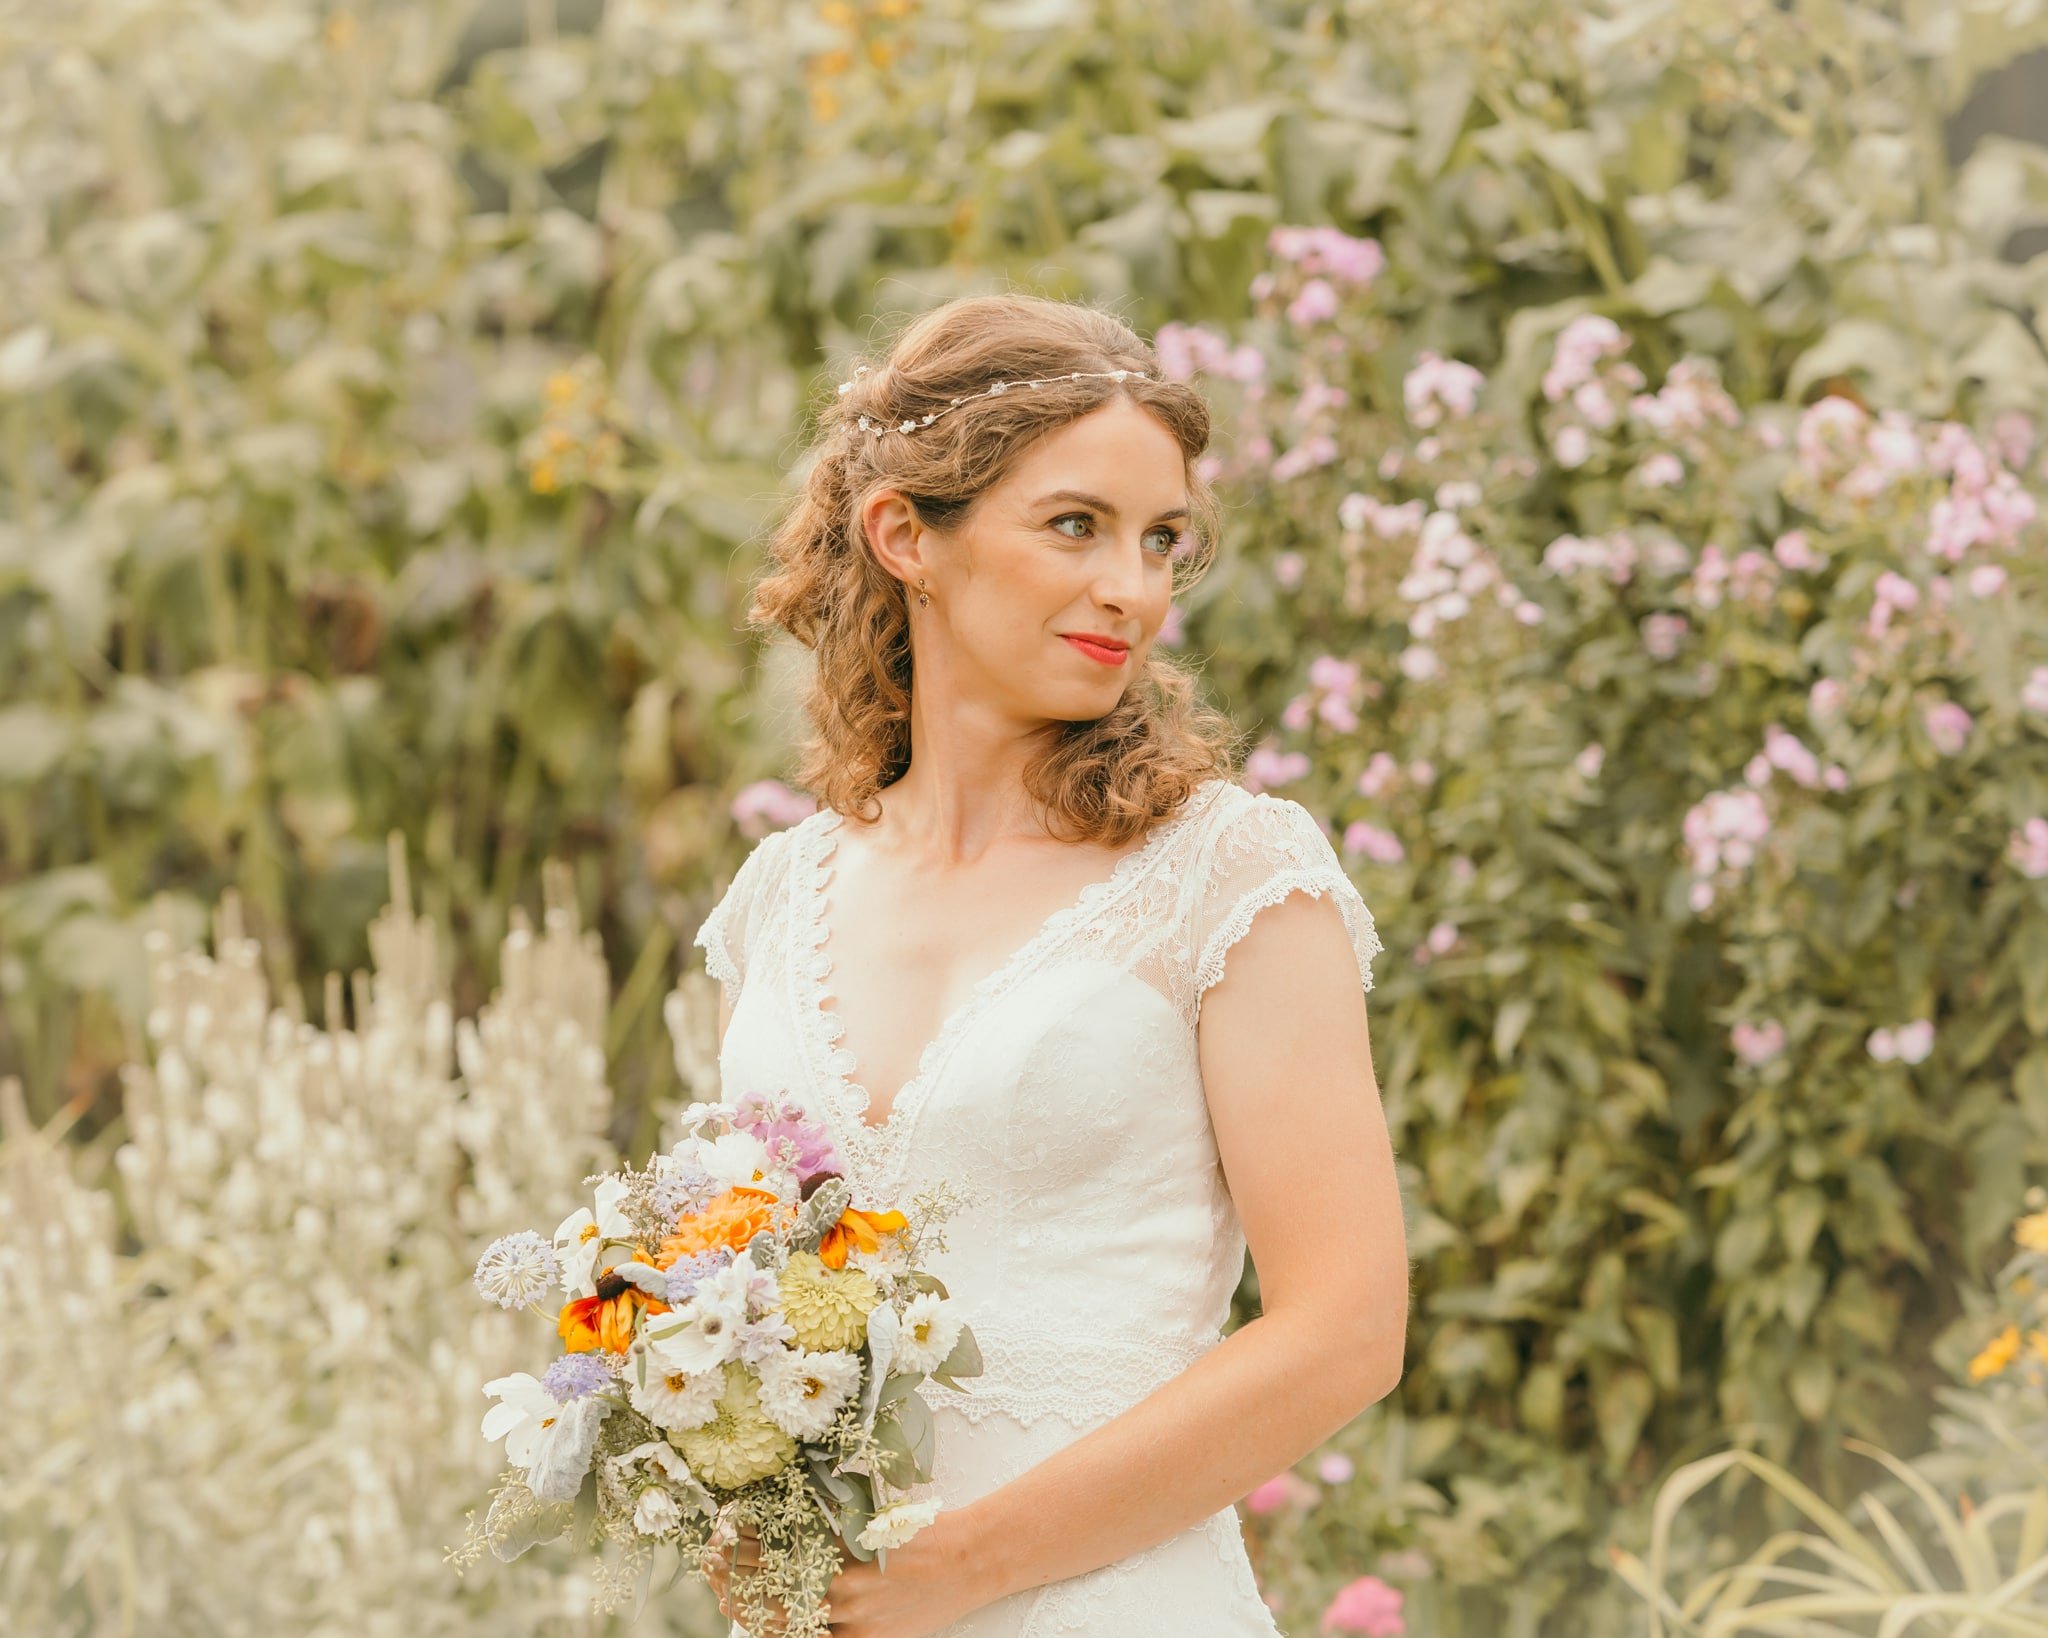 Ontario bride with fall wedding bouquet